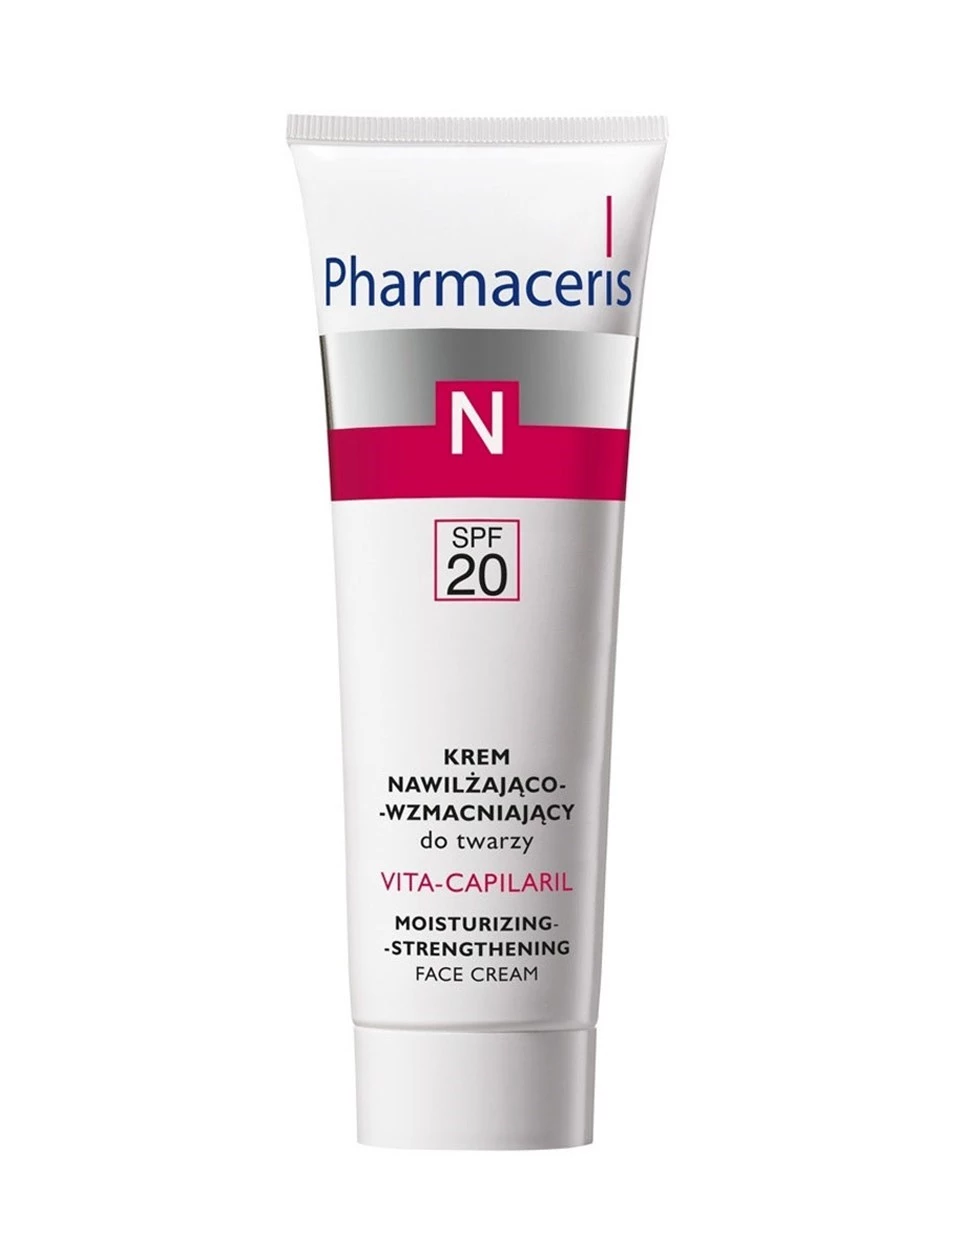 Pharmaceris N Vita-Capilaril Moisturising Face Cream Spf 20 - 50 ml